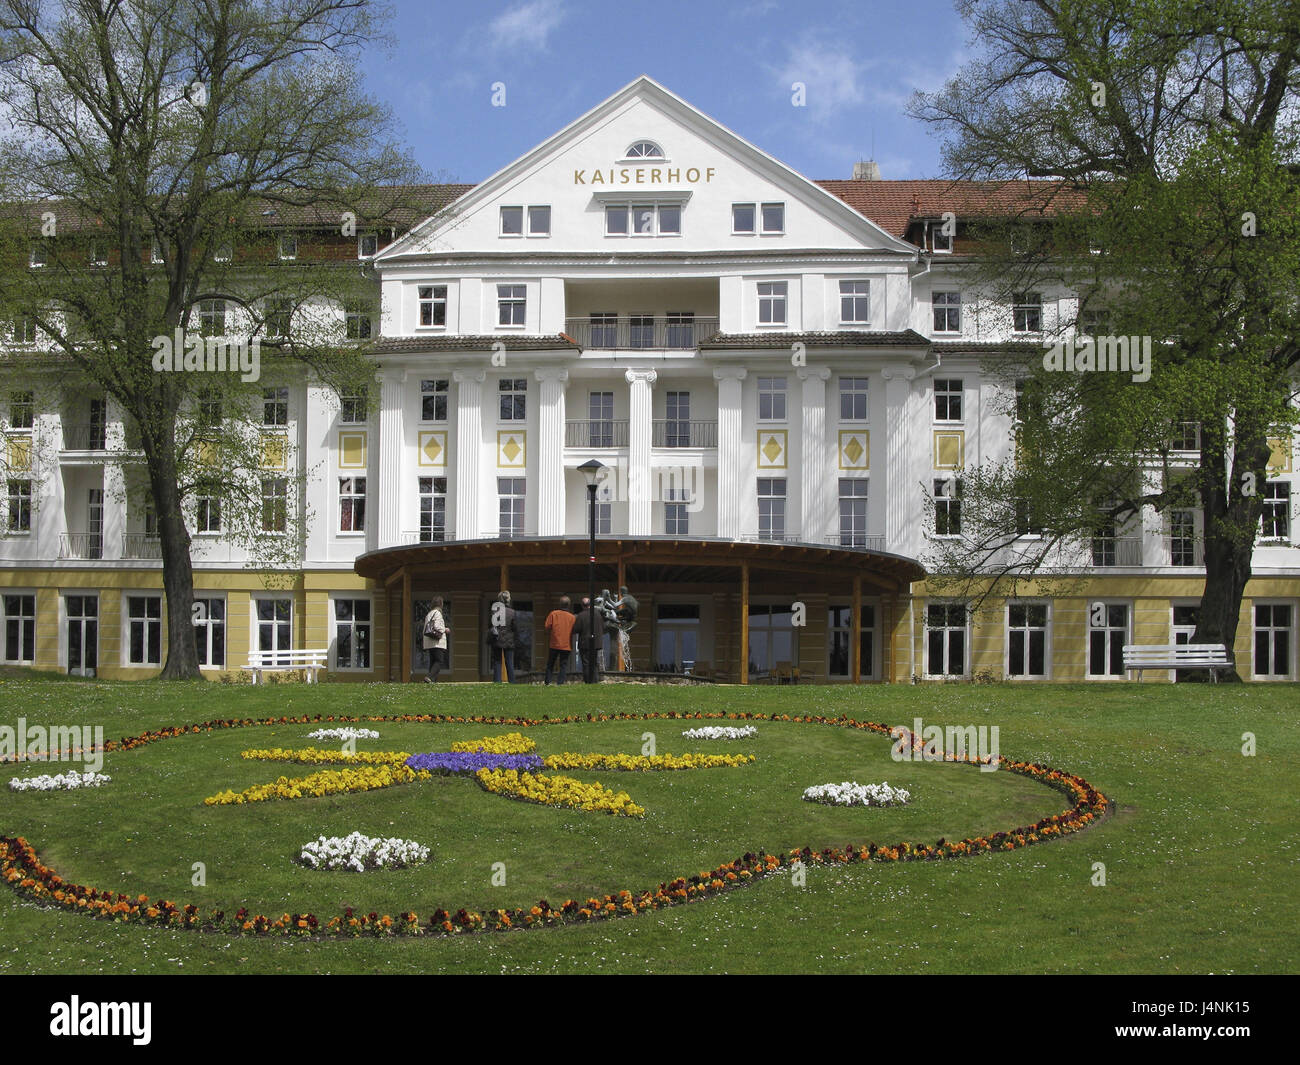 Germany, Thuringia, bath Dear stone, Health resort hotel Kaiserhof, Park, Stock Photo